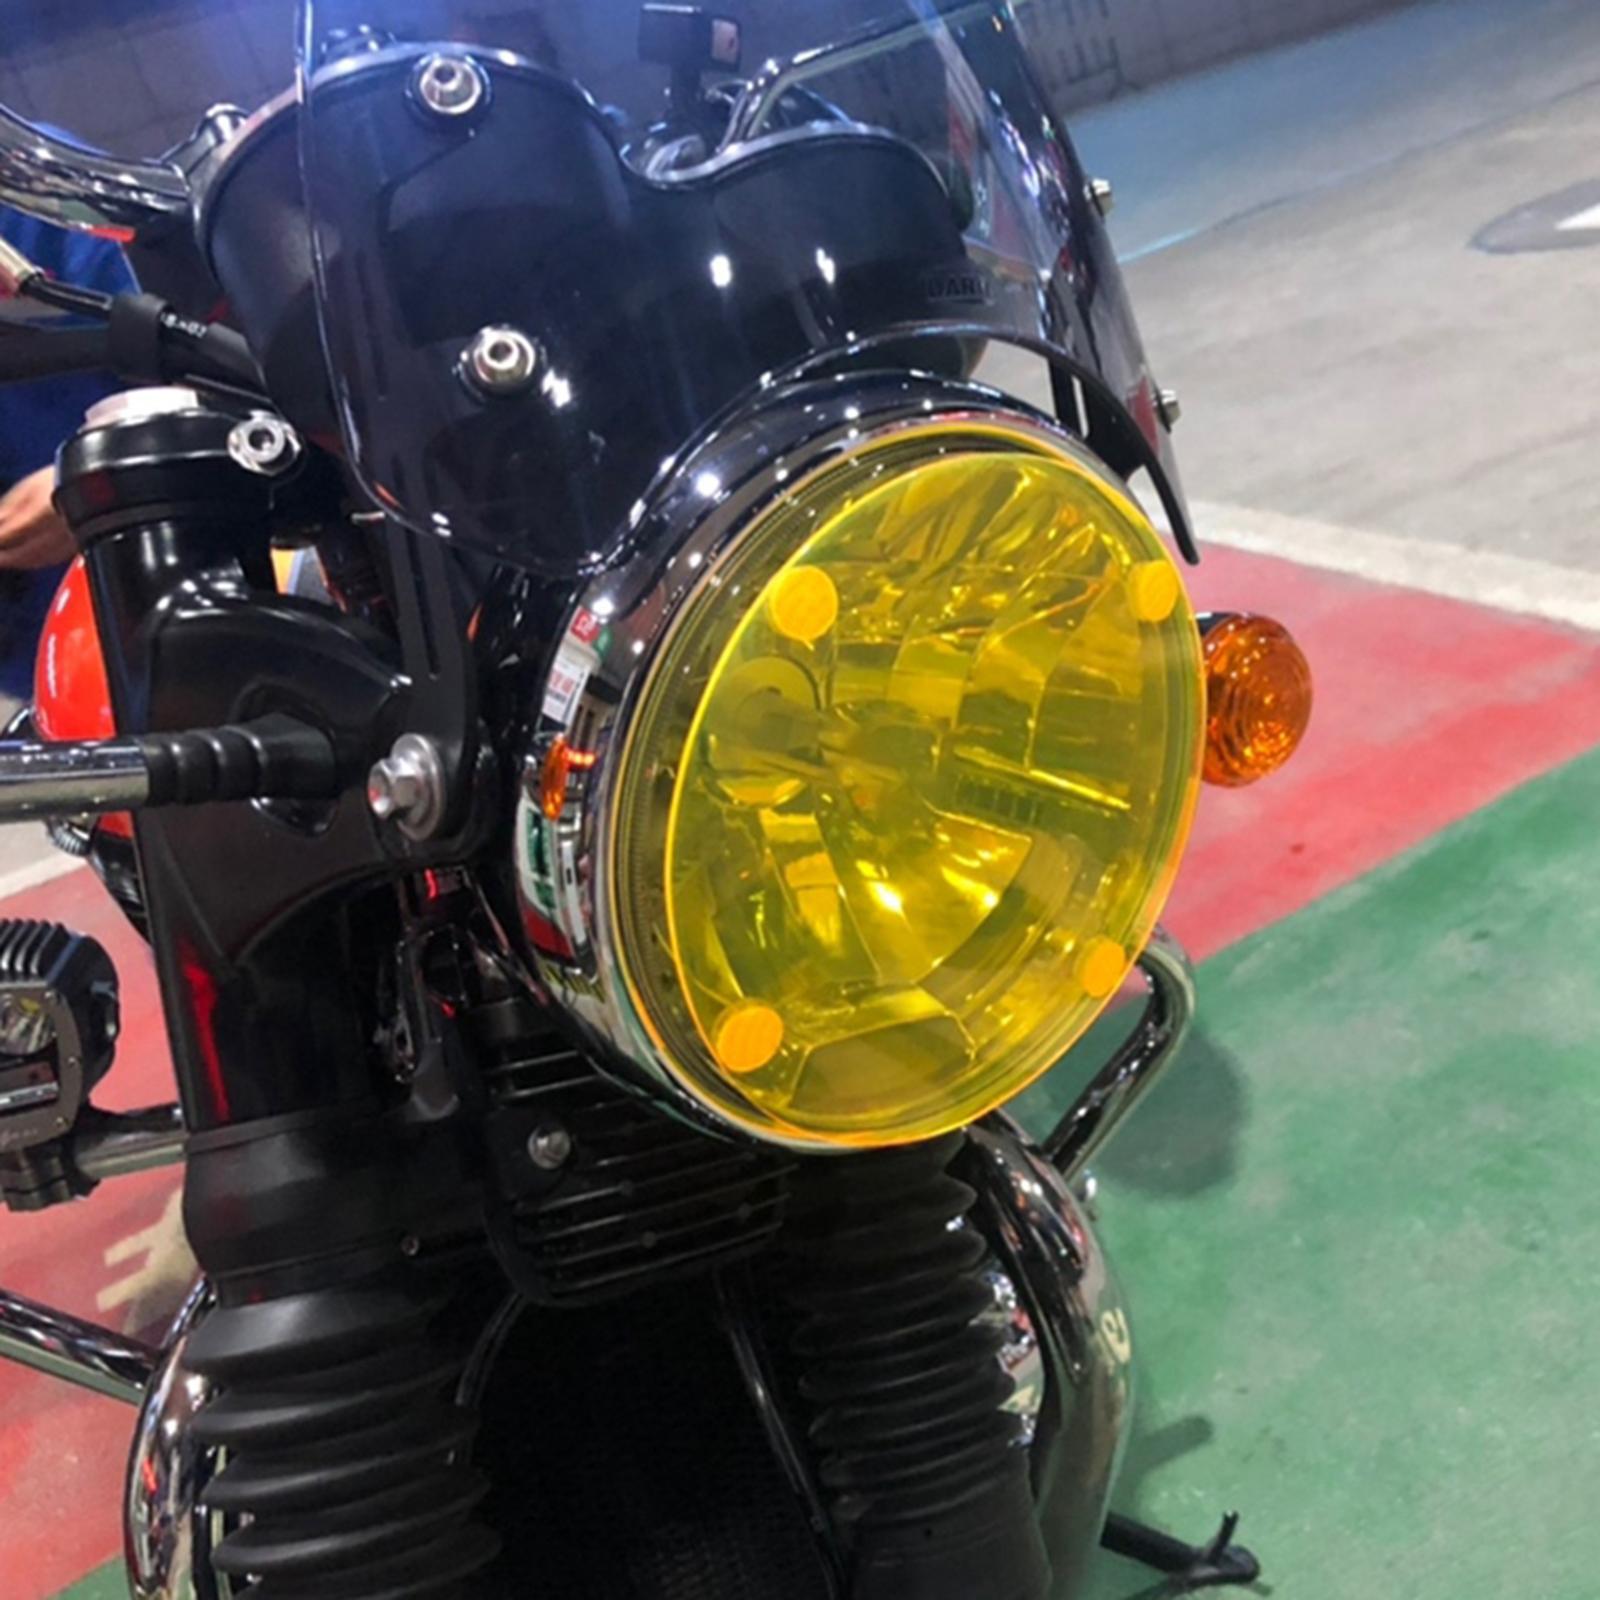 Motorcycle Vintage Headlight Lens Filter for SUZUKI GSX 1100 G 91-93 GSF 400 P Bandit 91-93 GSF 400 Bandit